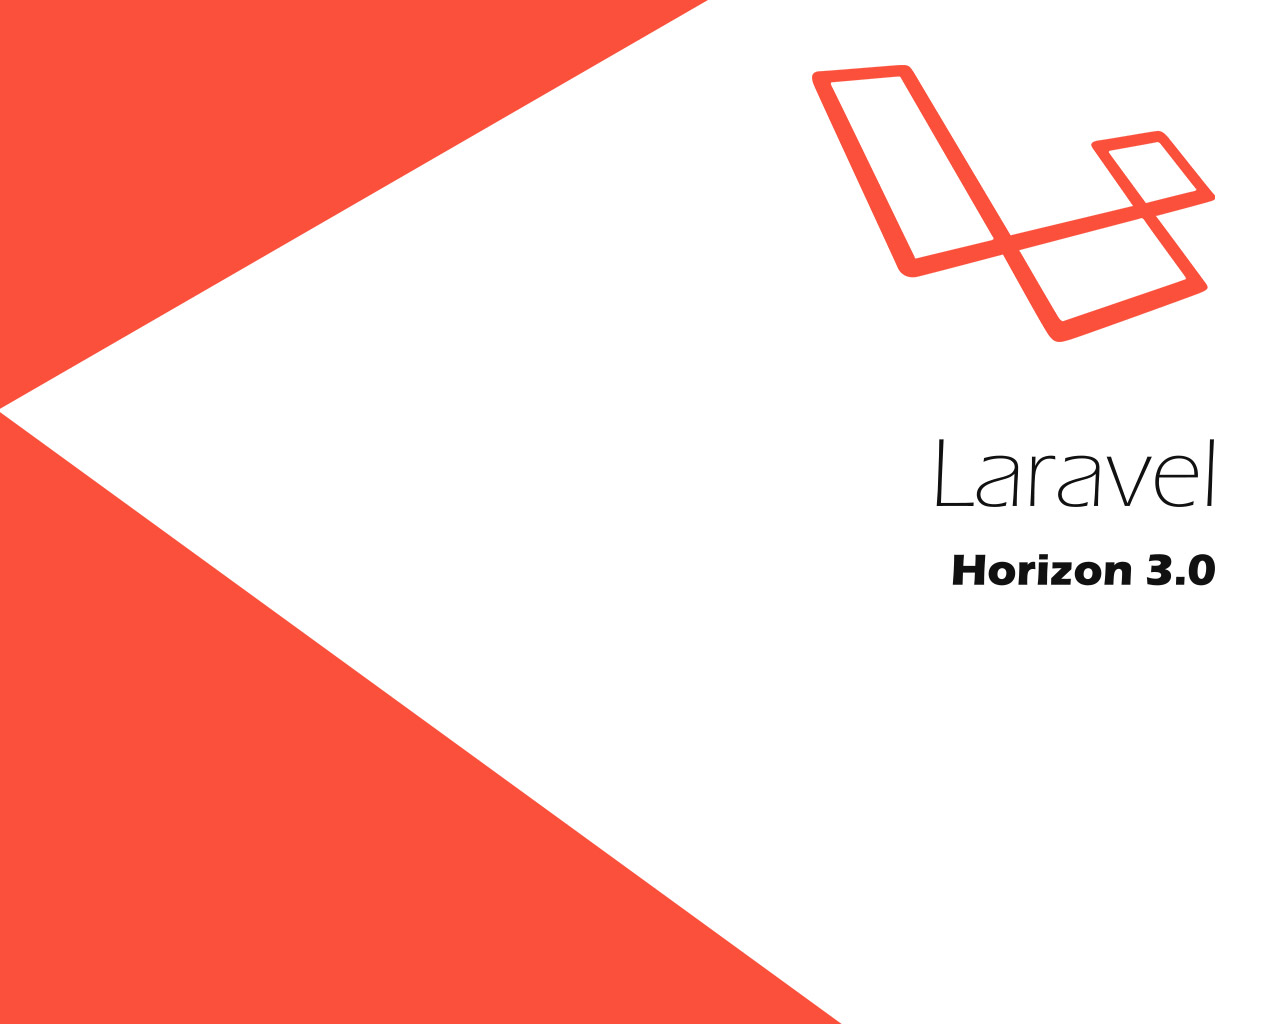 Laravel Horizon 3.0 is here: Night Mode for the Laravel UI